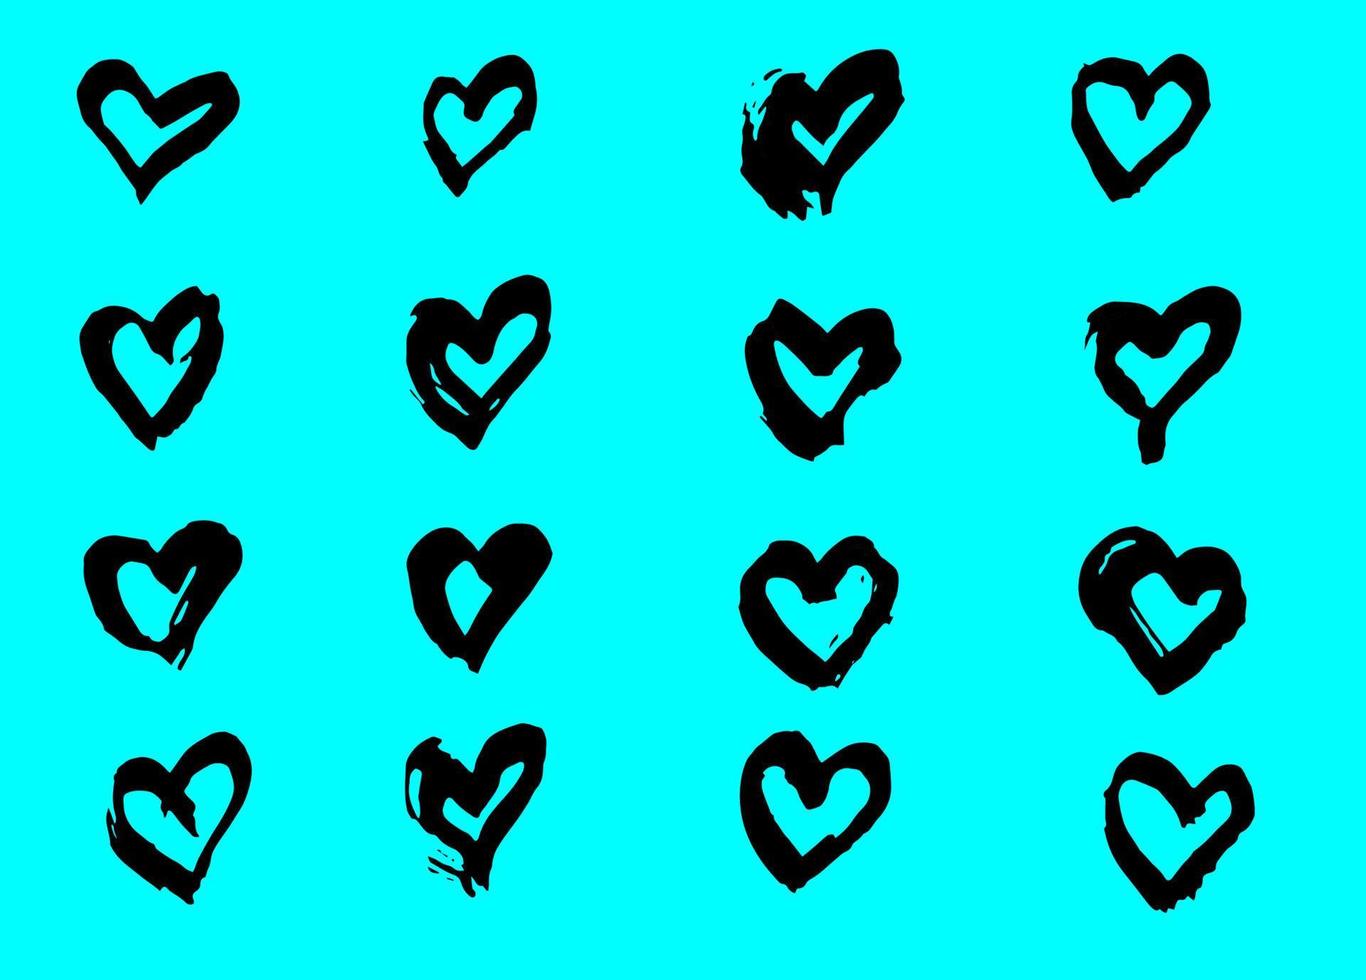 vector set amor marca negra. símbolo gráfico de signo de amor. marca de amor grunge